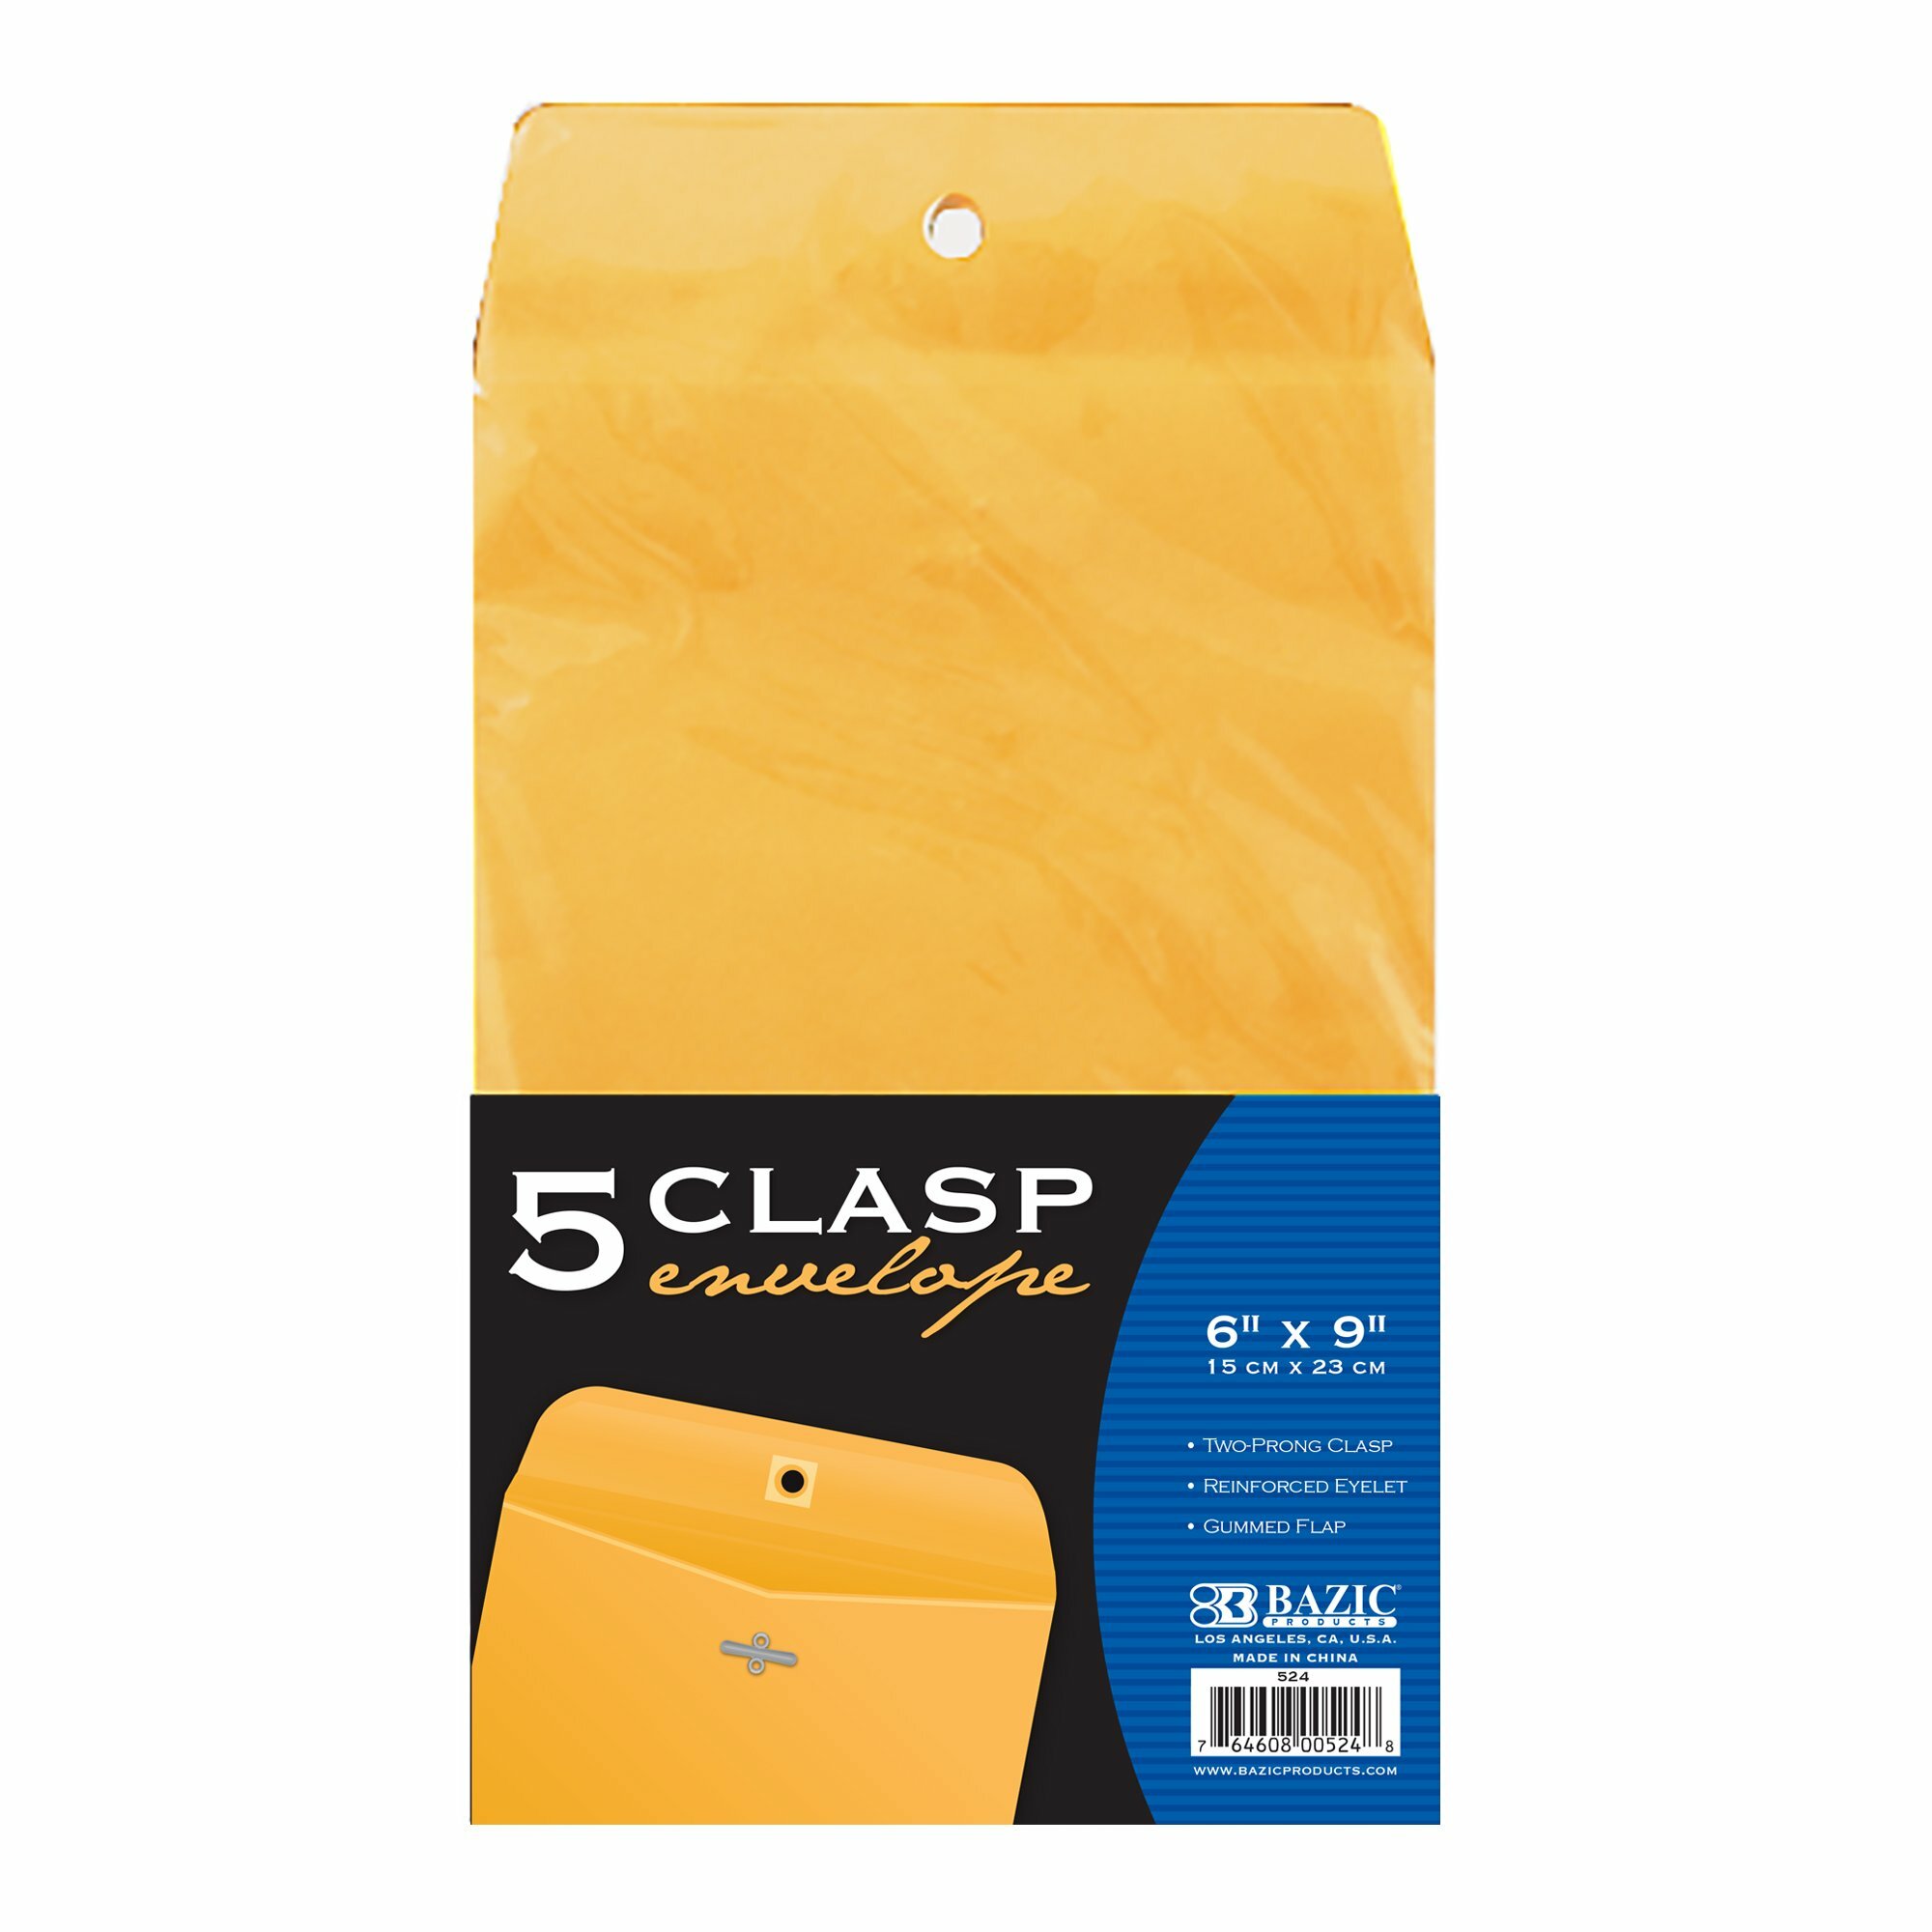 Clasp Envelope Bazic 6x9/5 (IN-6) (524)